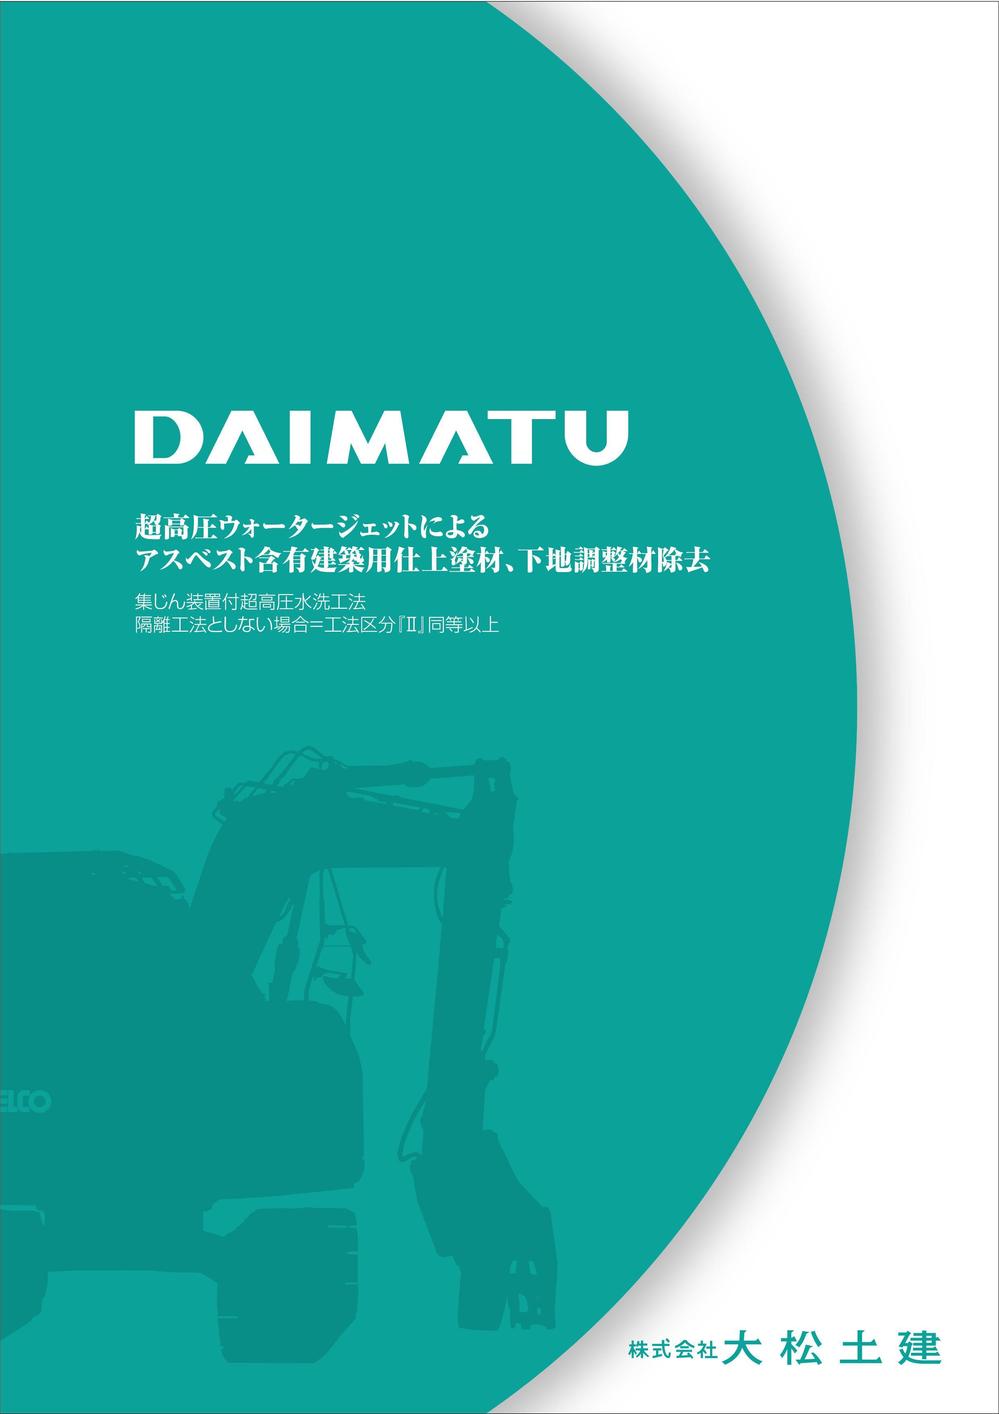 daimatsu1_1.jpg